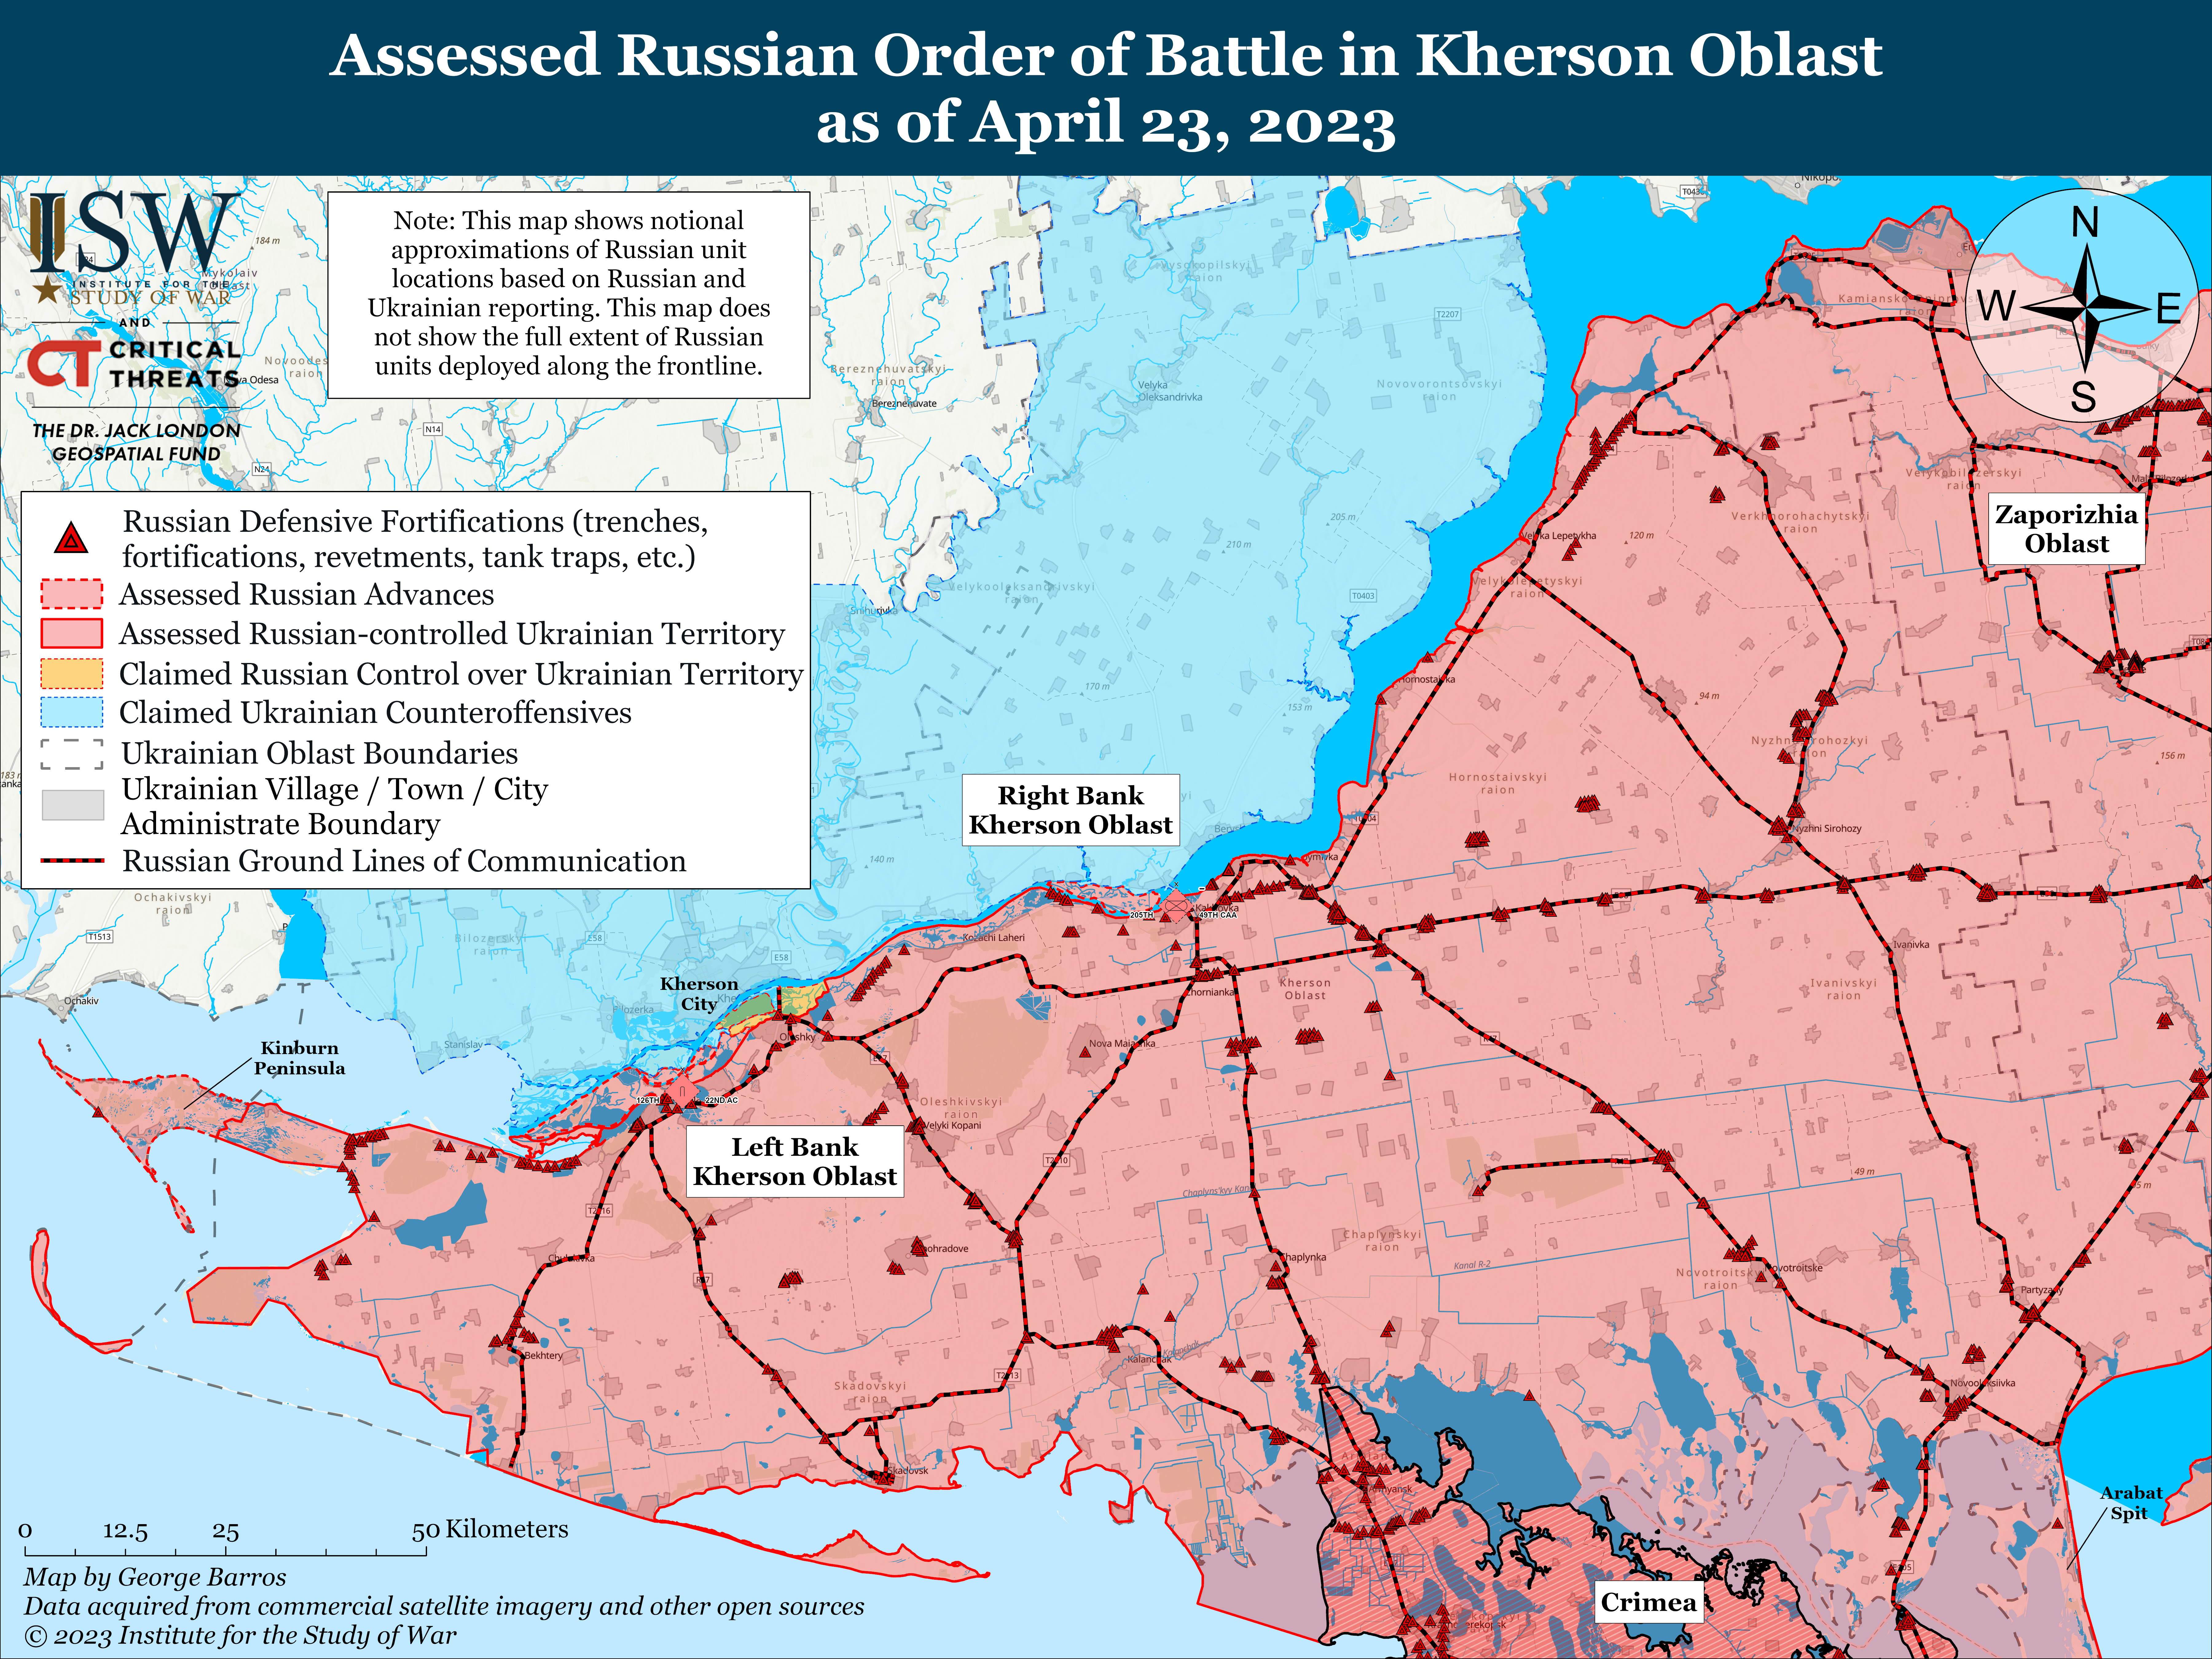 Фронт в Херсонской области на 23 апреля 2023 - карта ISW